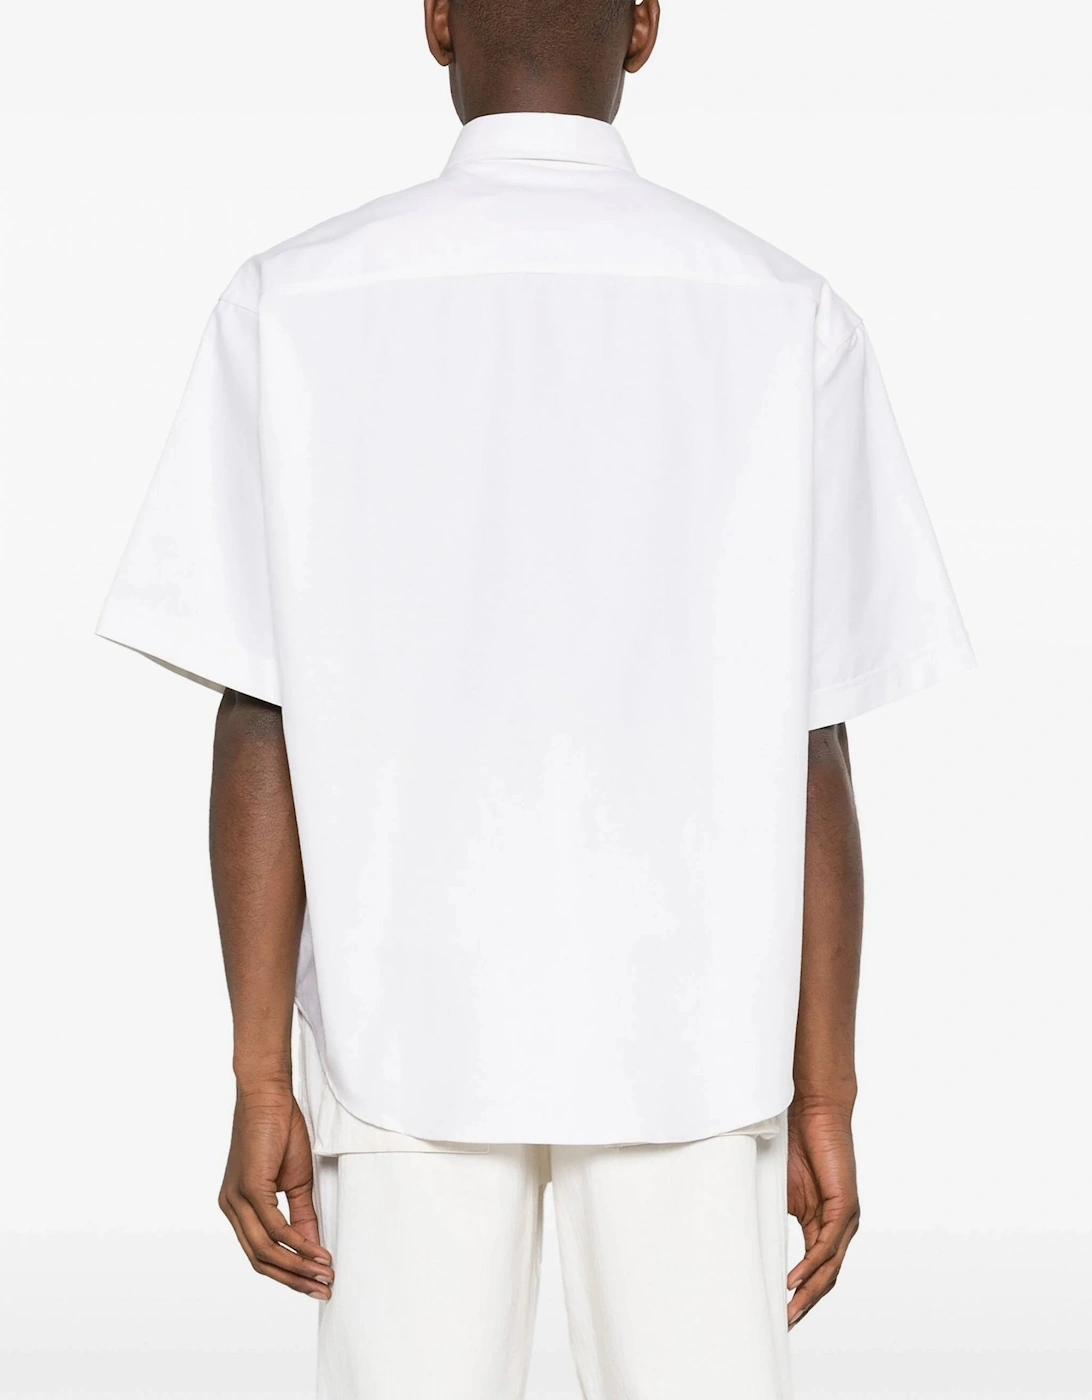 Boxy ADC Cotton Shirt White